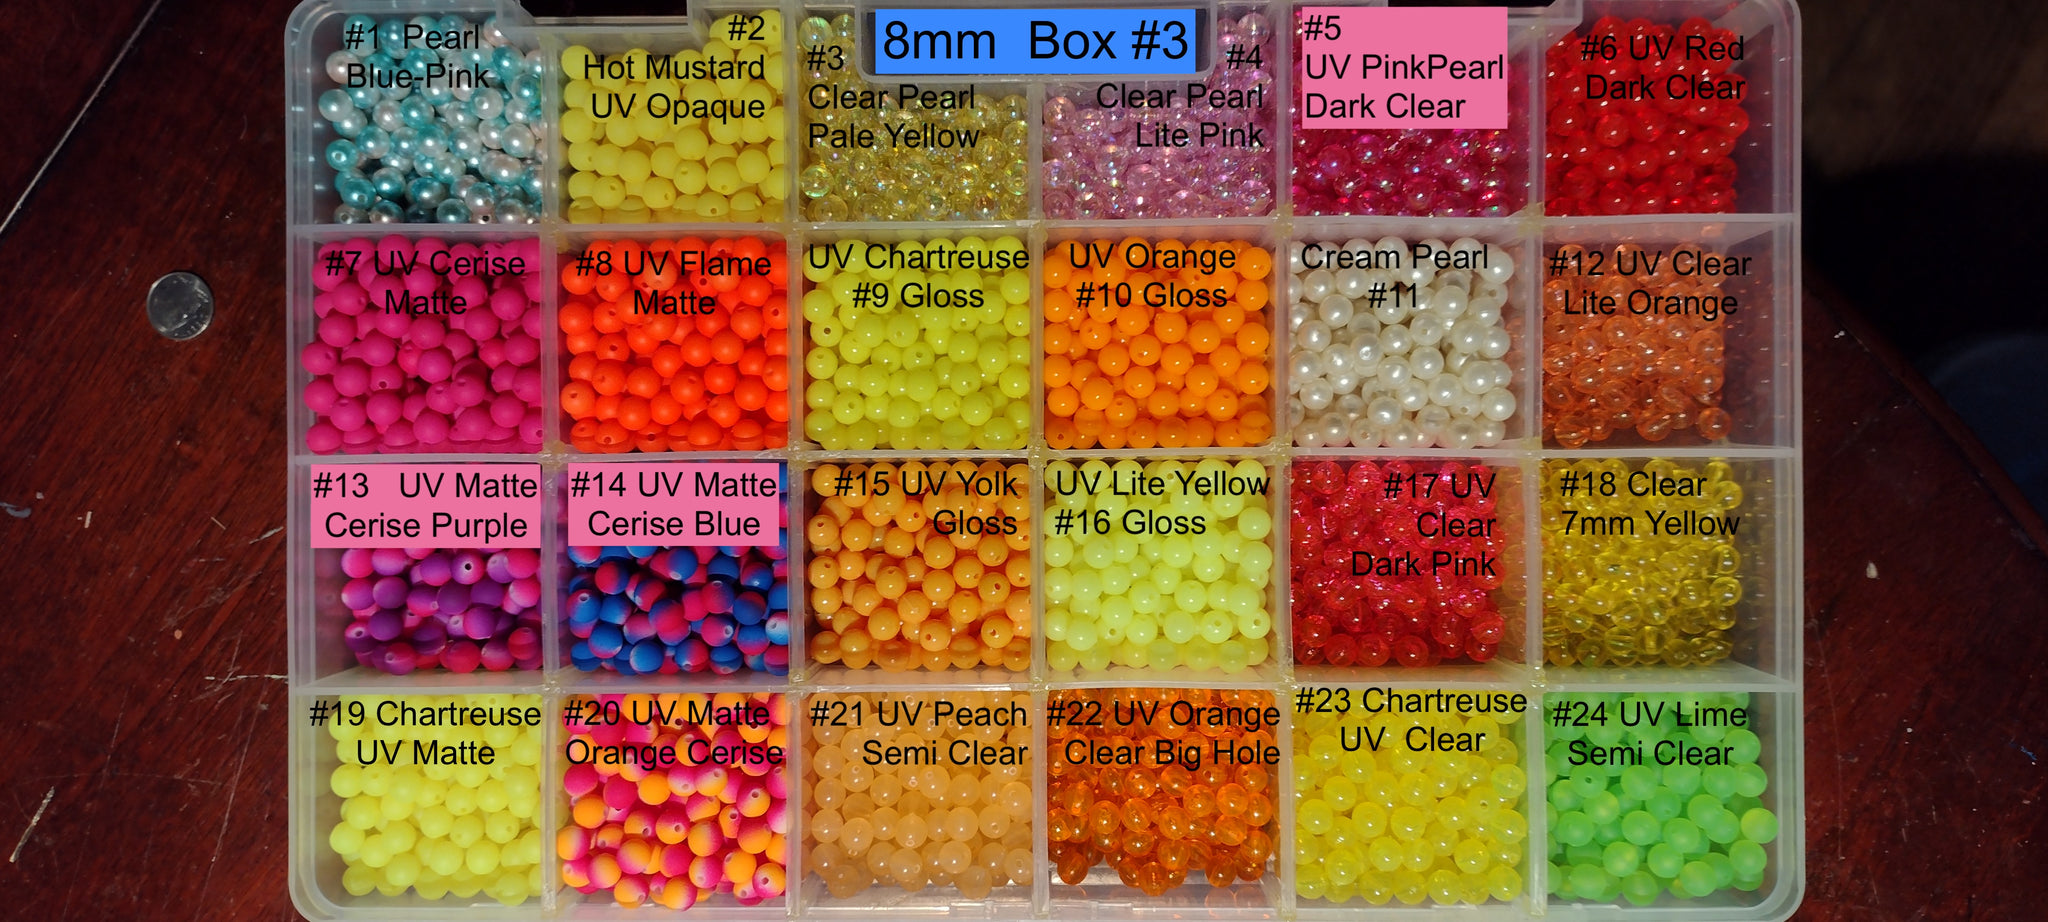 Box #3 More & Better 8mm Beads